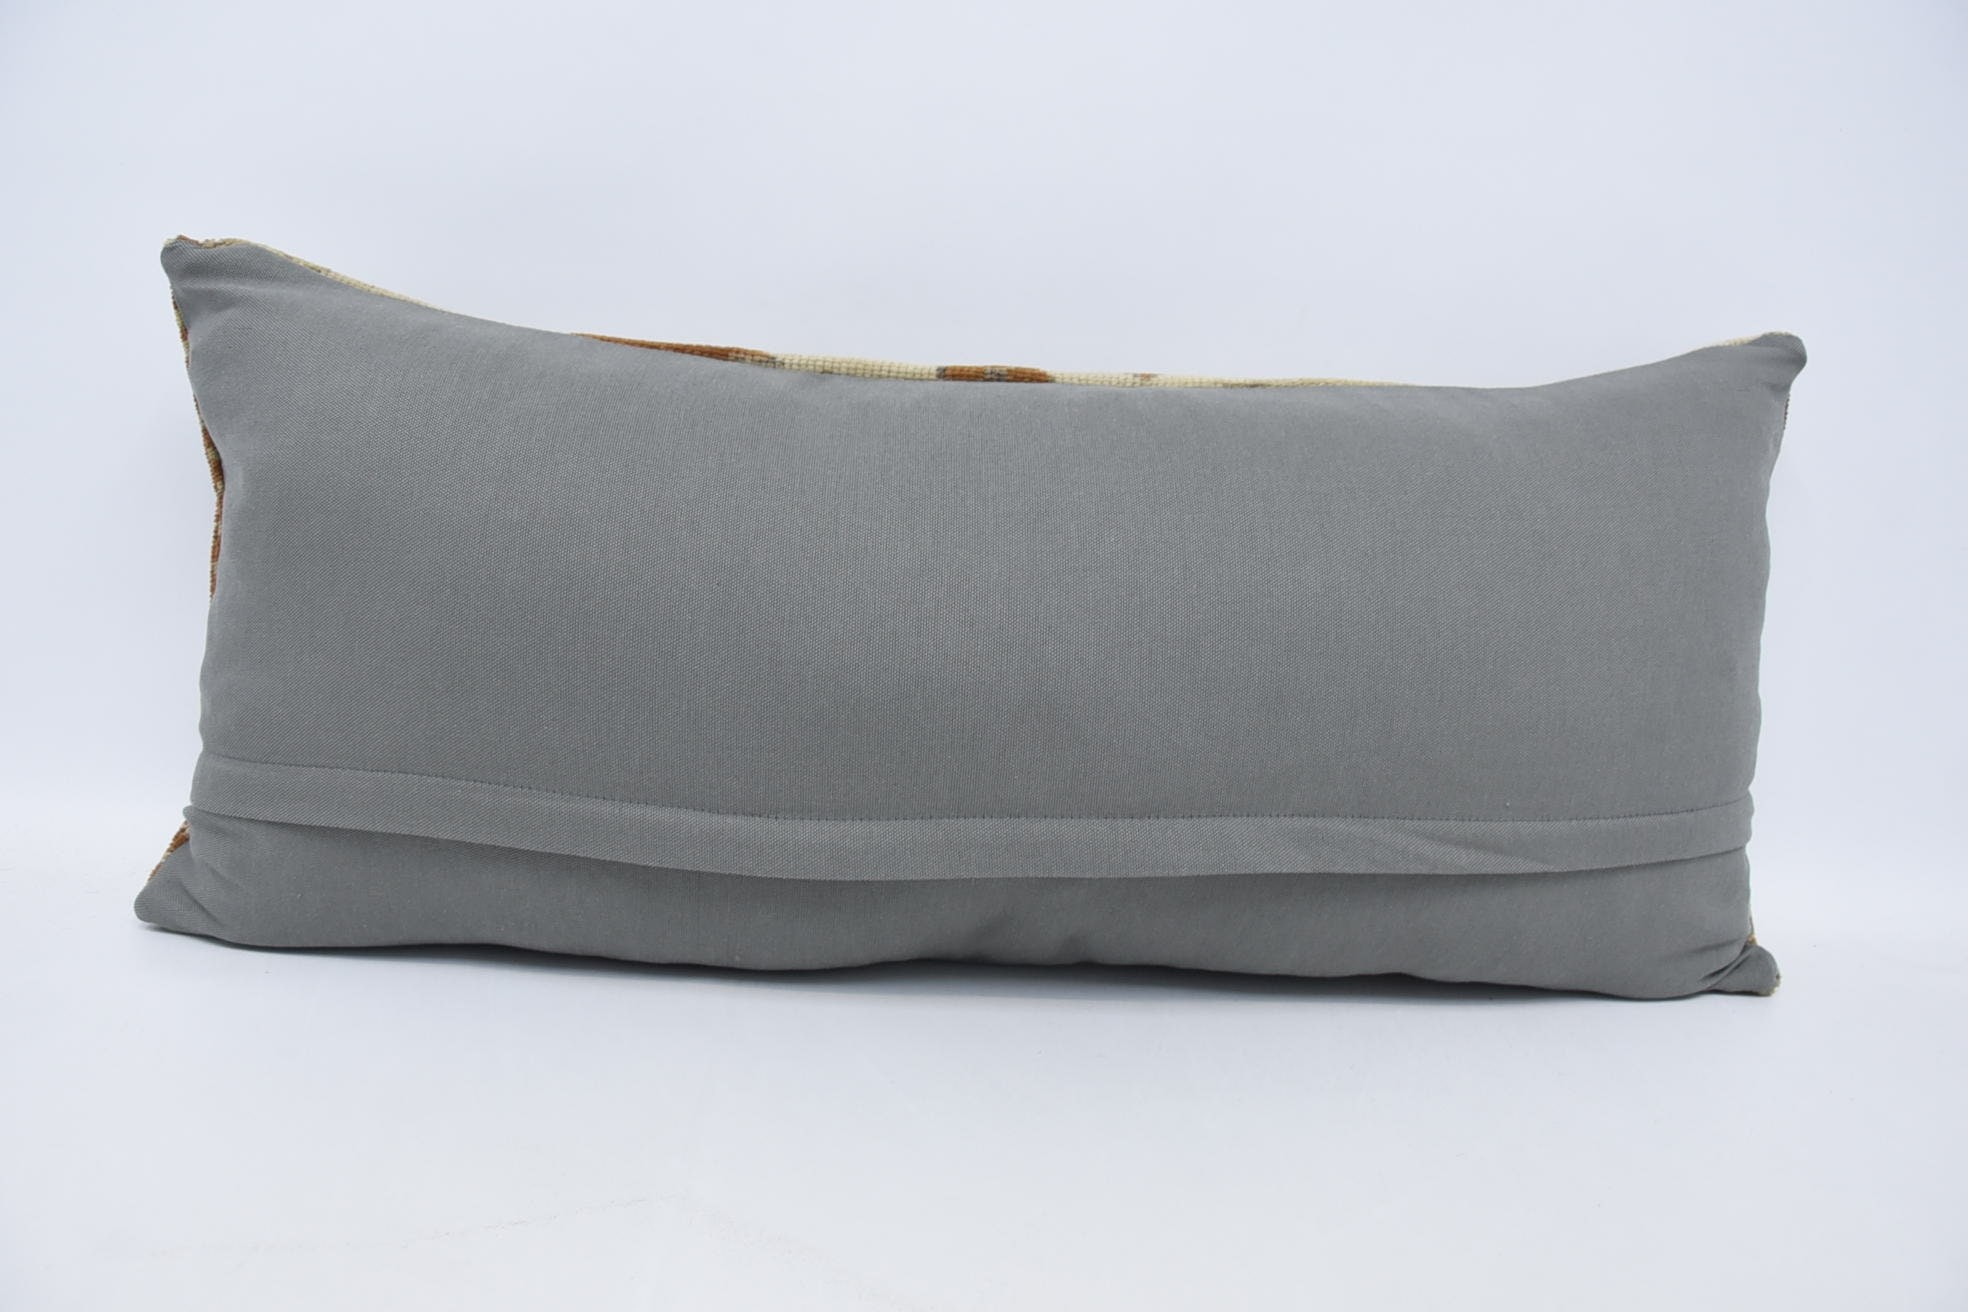 Kilim Pillow, Home Decor Pillow, Meditation Pillow, 16"x36" Beige Cushion Case, Vintage Pillow Cover, Throw Kilim Pillow